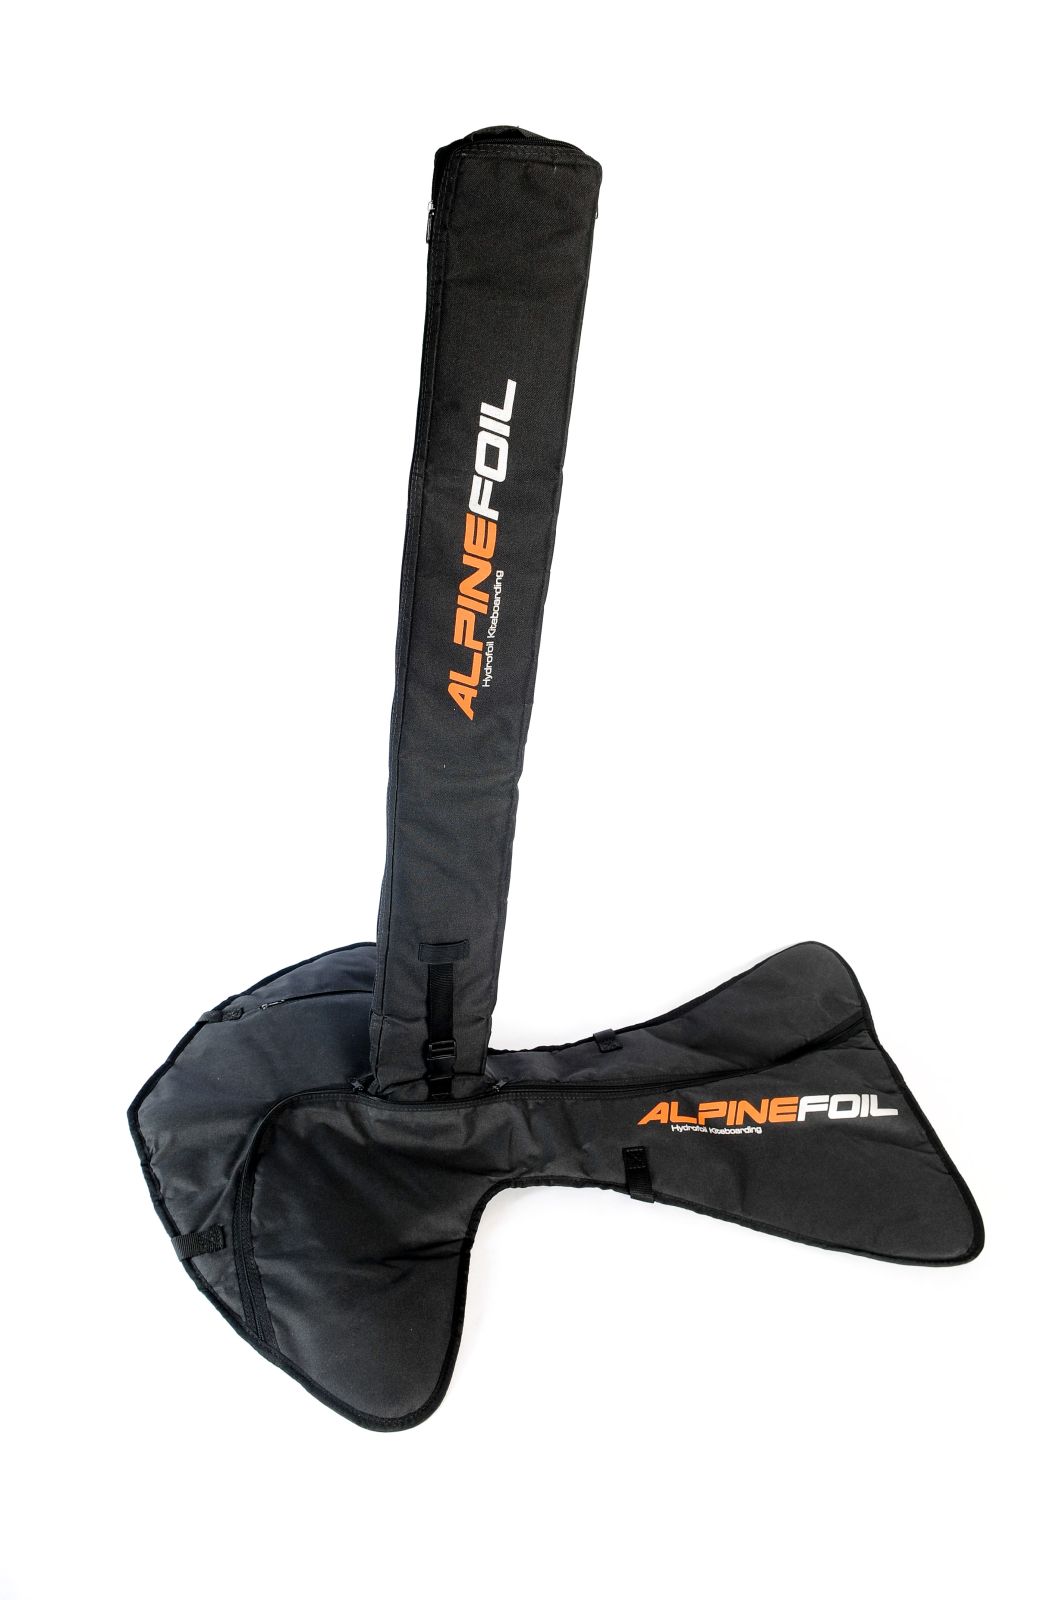 Kitefoil alpinefoil carbon bag boardbag footstrap accessories 3181